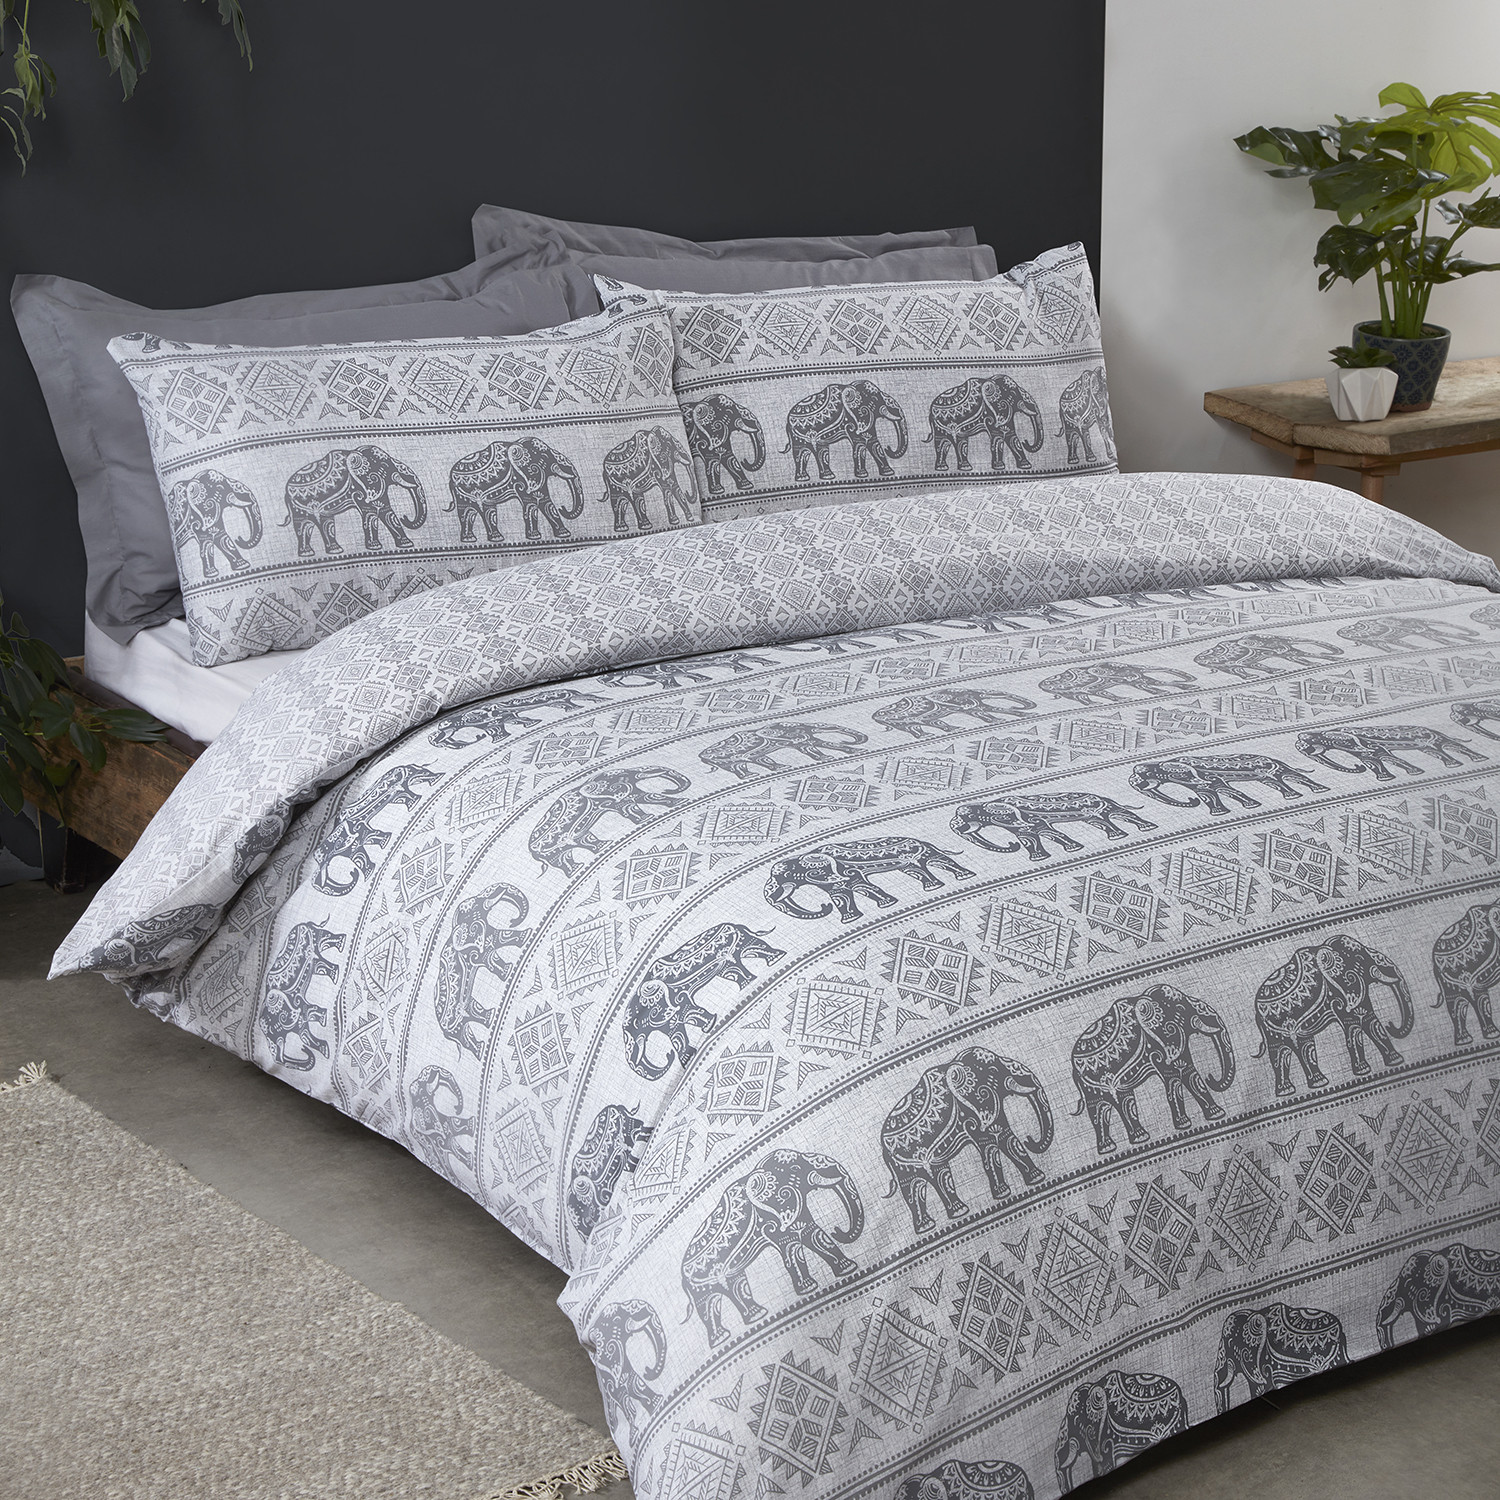 My Home Hathi Elephant Double Duvet Cover and Pillowcase Set Image 2